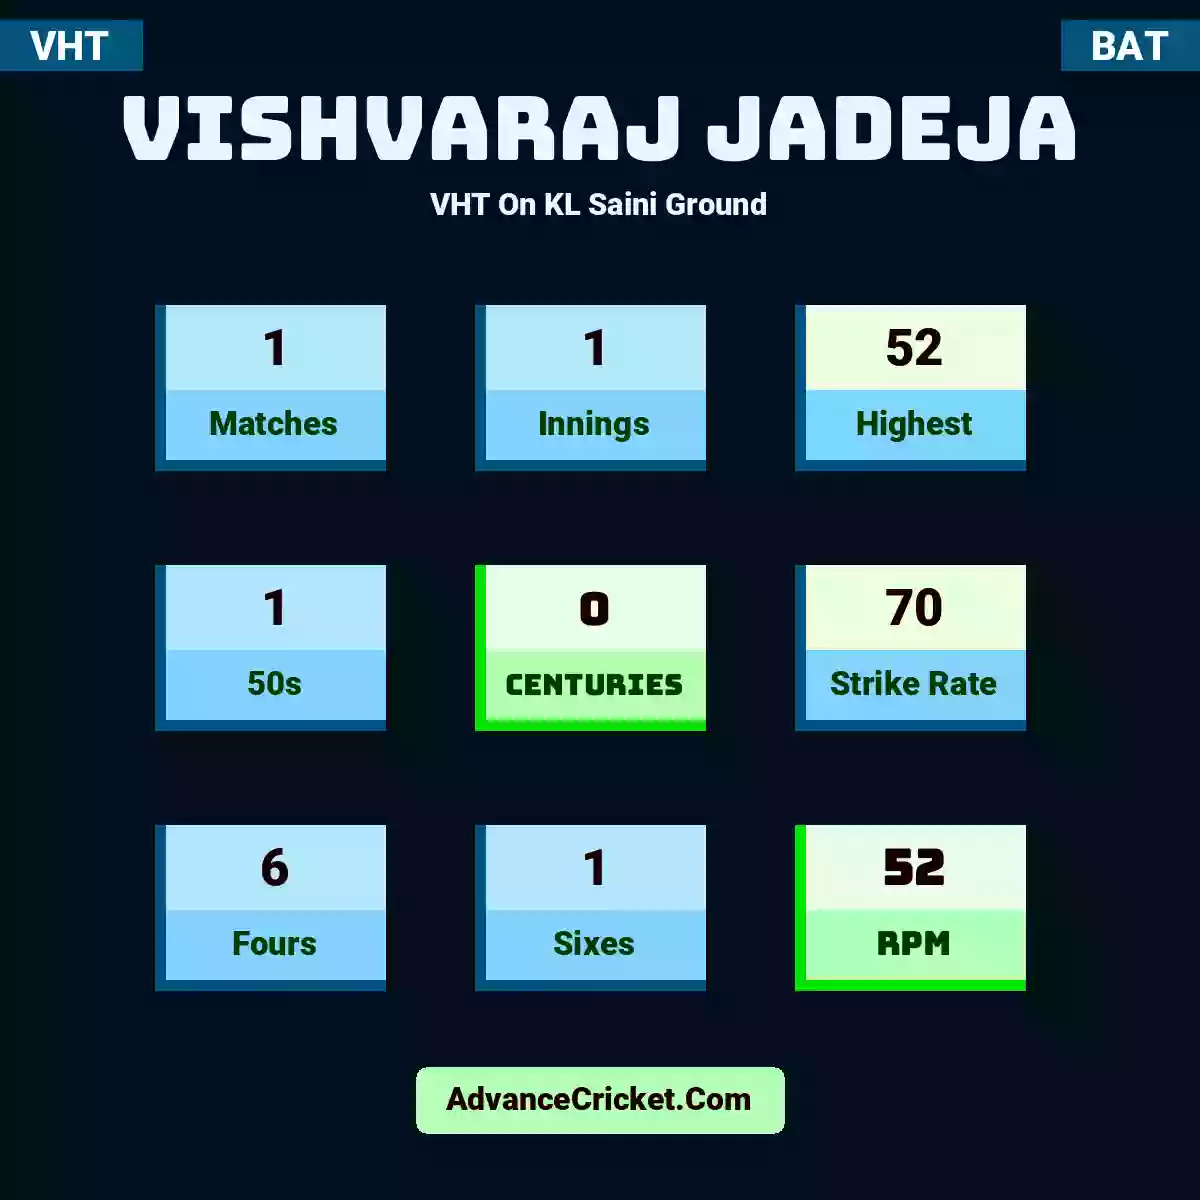 Vishvaraj Jadeja VHT  On KL Saini Ground, Vishvaraj Jadeja played 1 matches, scored 52 runs as highest, 1 half-centuries, and 0 centuries, with a strike rate of 70. V.Jadeja hit 6 fours and 1 sixes, with an RPM of 52.